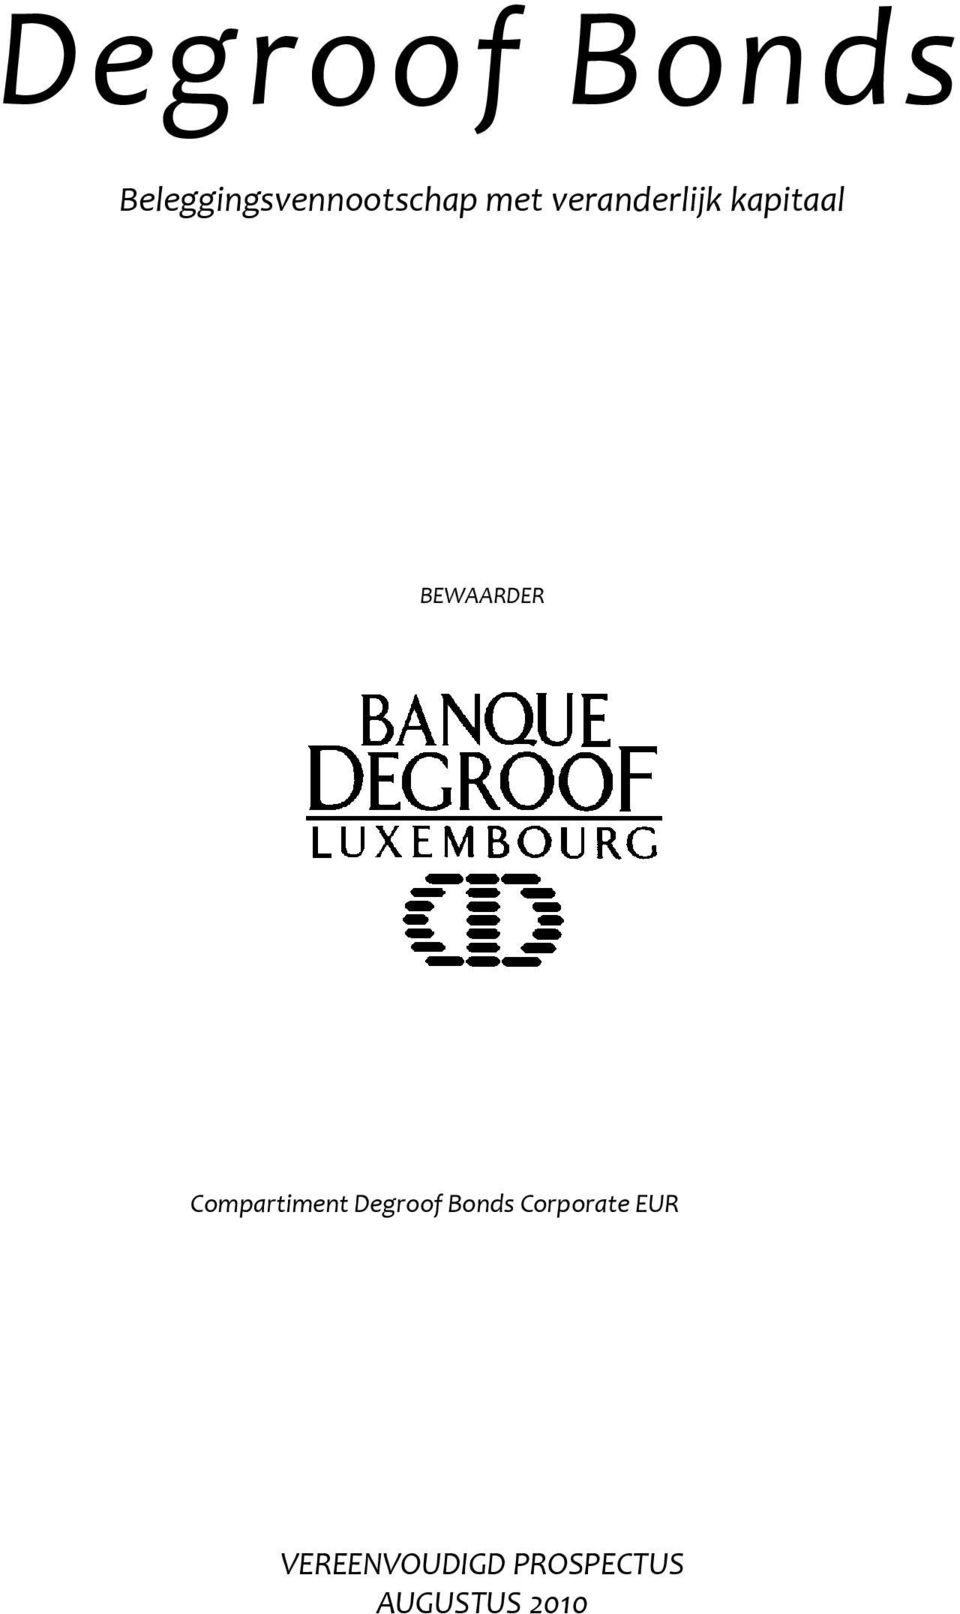 Compartiment Degroof Bonds Corporate